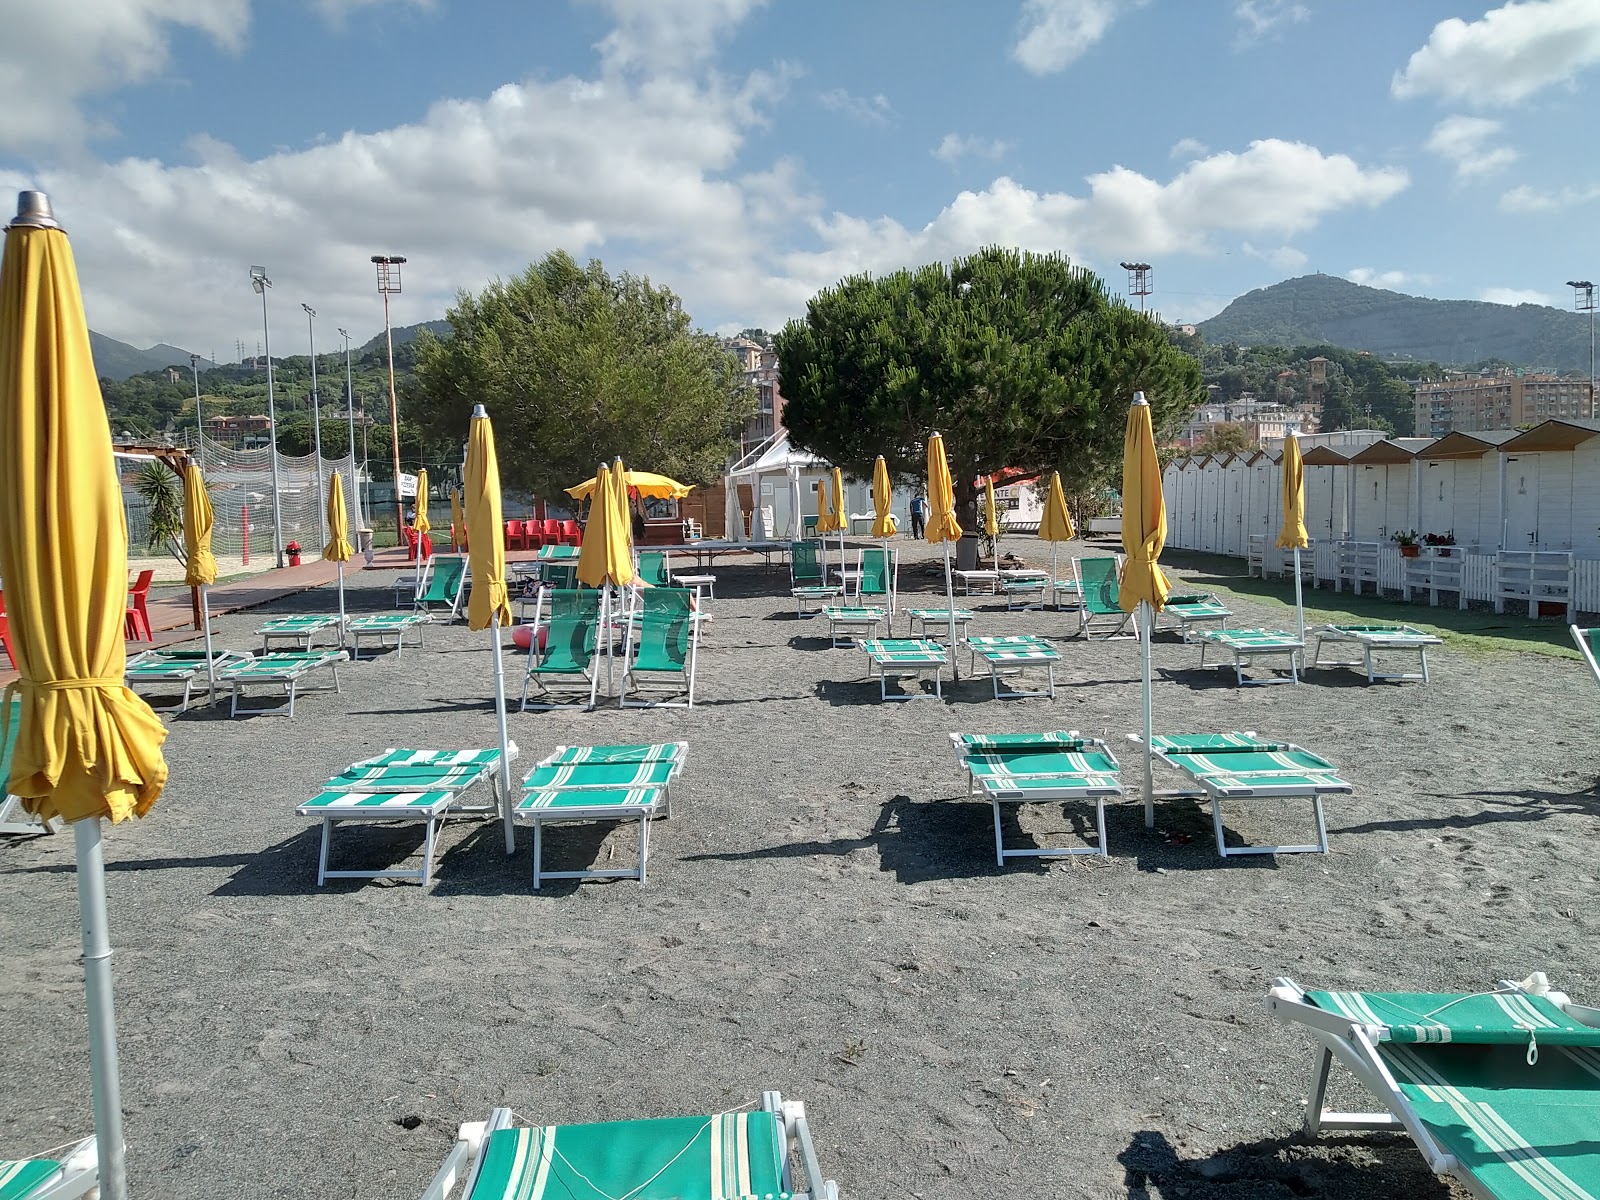 Foto av Spiaggia Multedo med låg nivå av renlighet